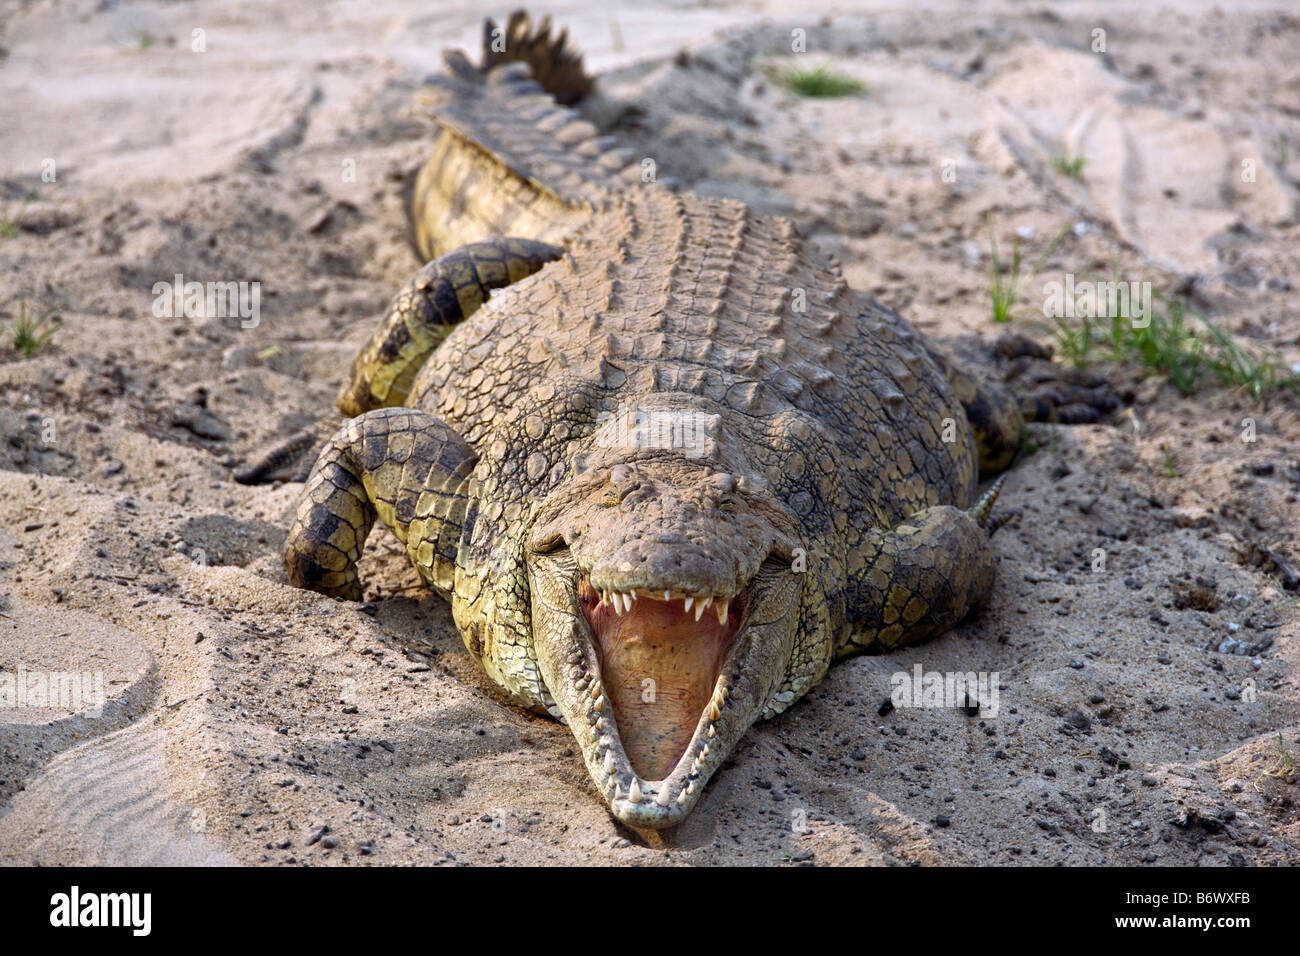 Tanzania, Katavi National Park. Large Nile crocodiles bask in the sun on the banks of the Katuma River. Stock Photo